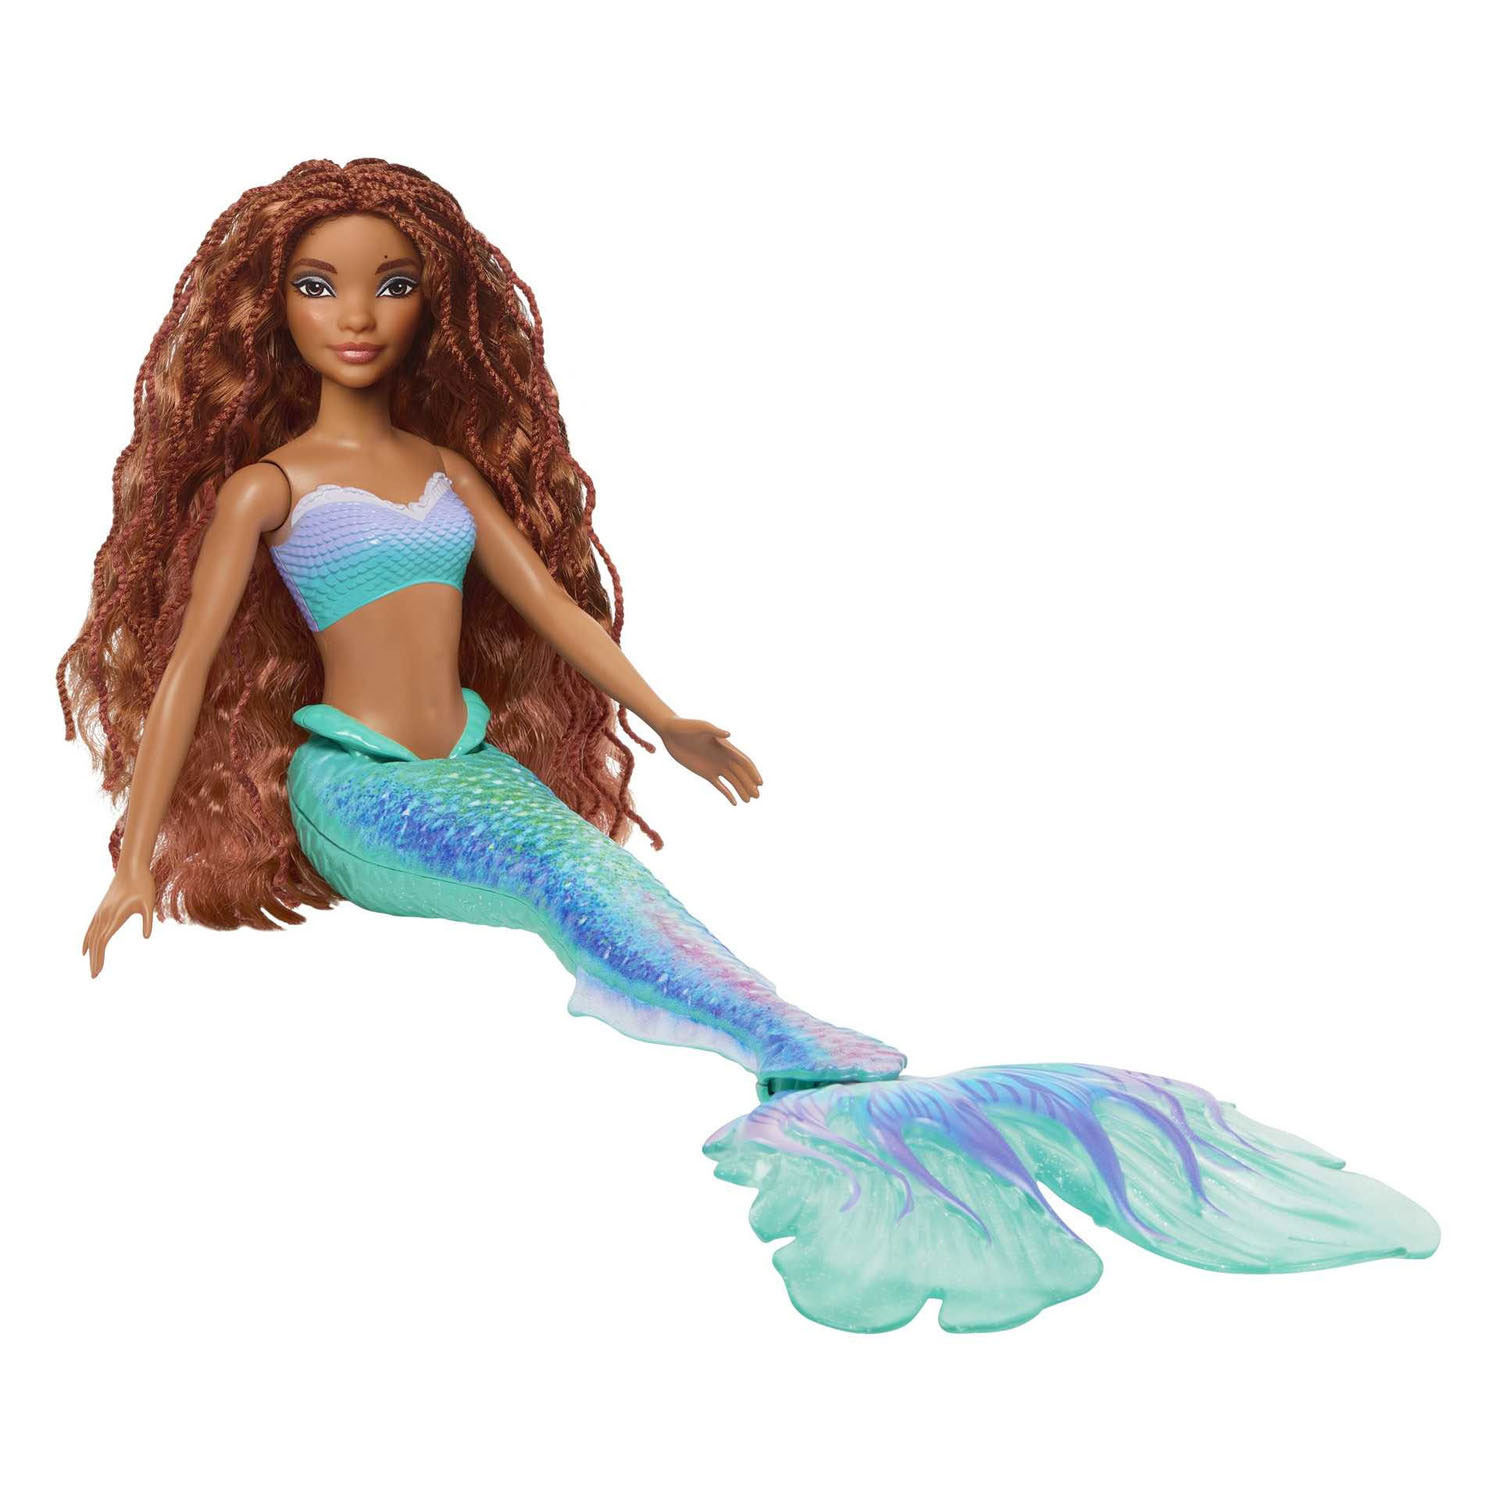 Disney The Little Mermaid Ariel Fashion Pop